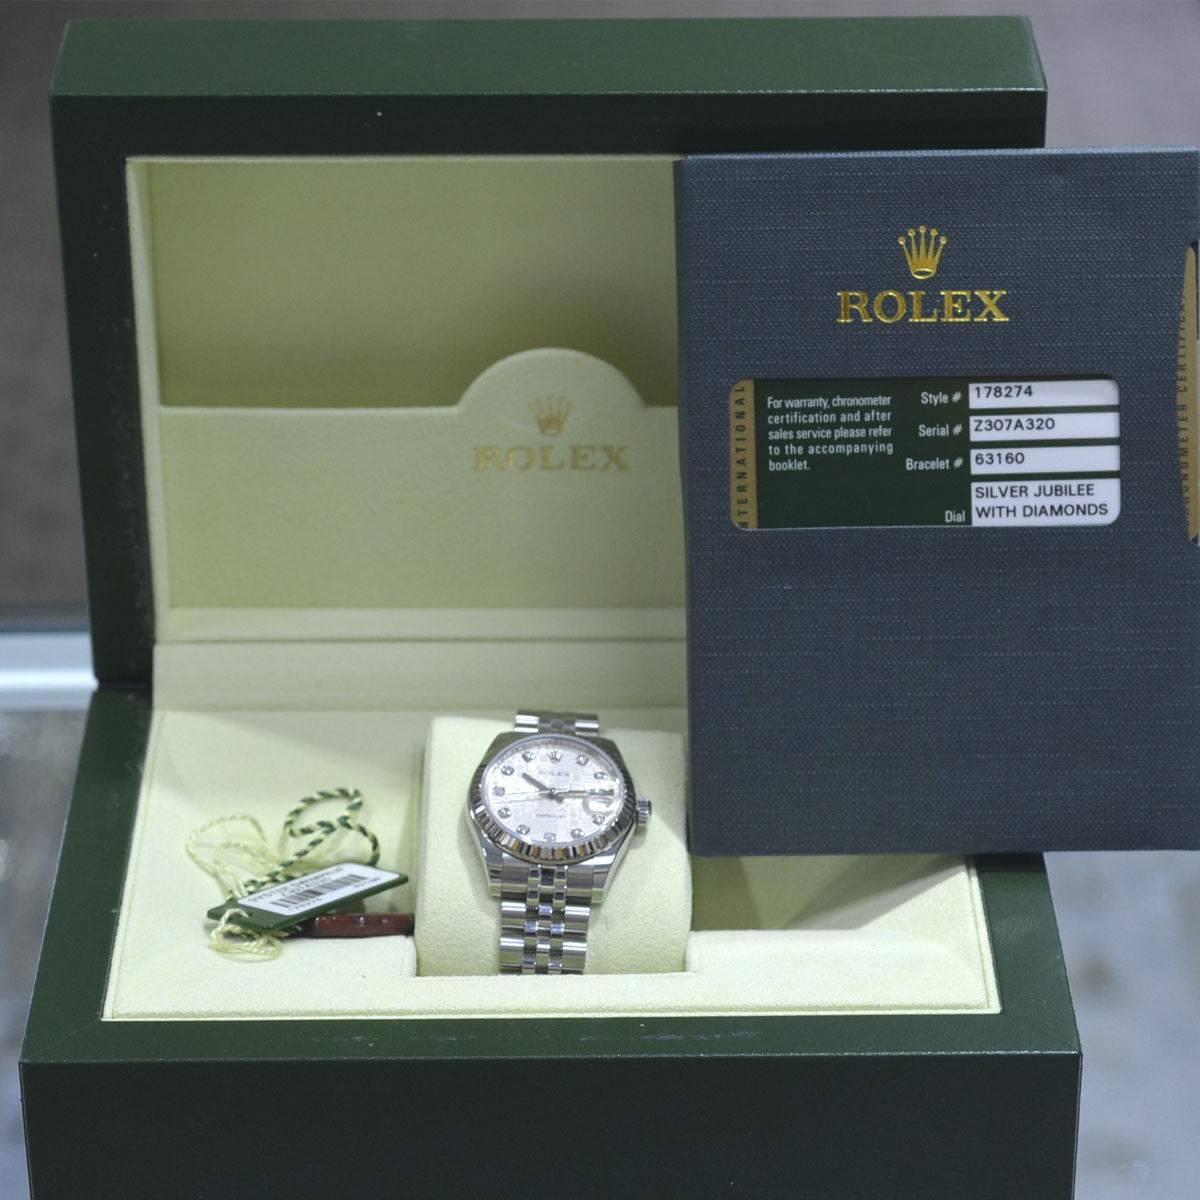 Rolex Ladies Stainless Steel Diamond Datejust Automatic Wristwatch Ref 178274 2